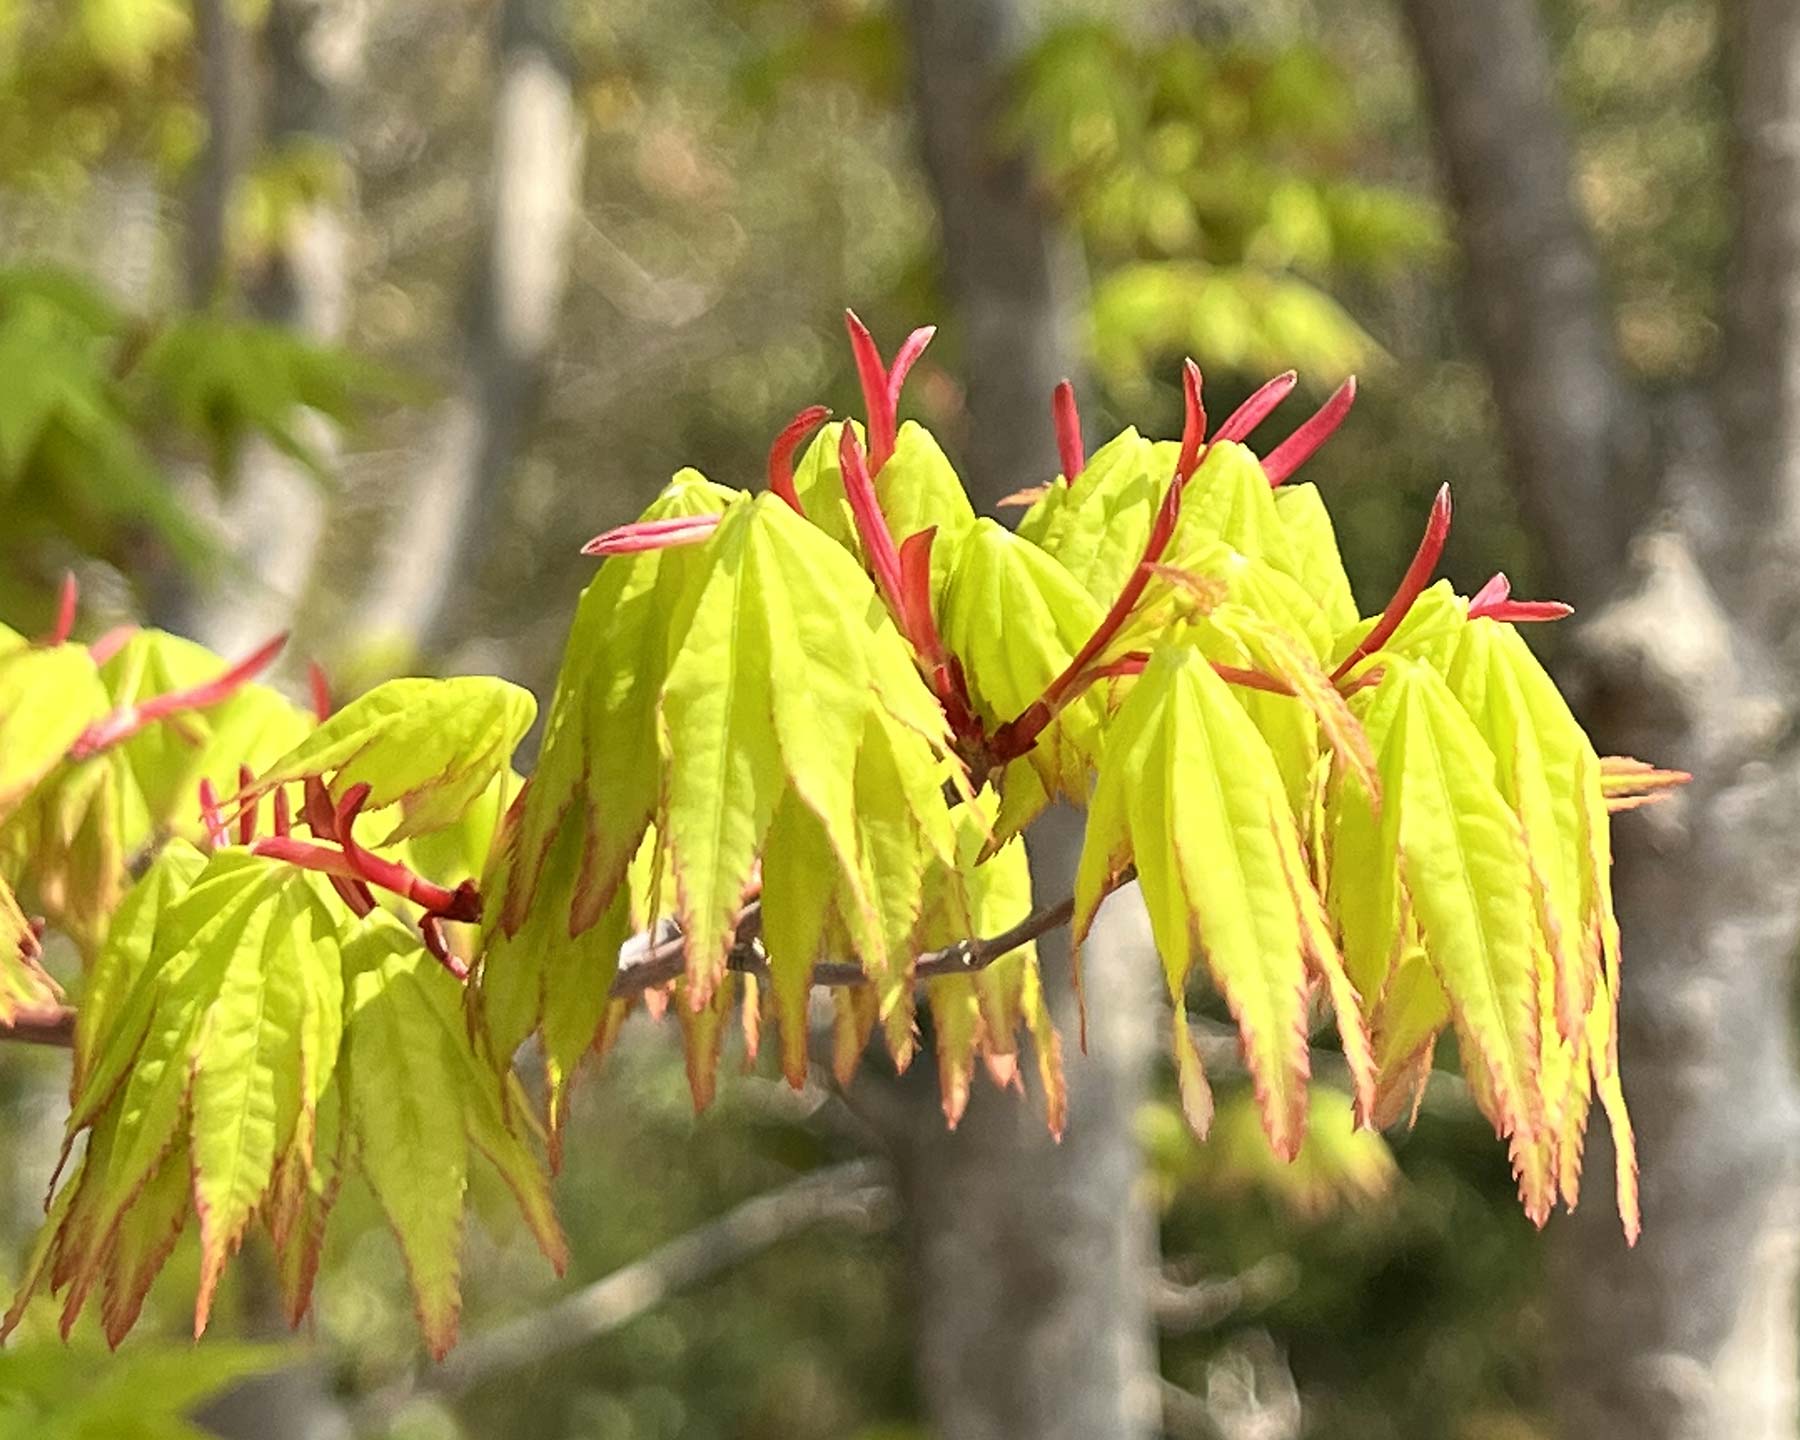 Acer palmatum - seen in South Korea